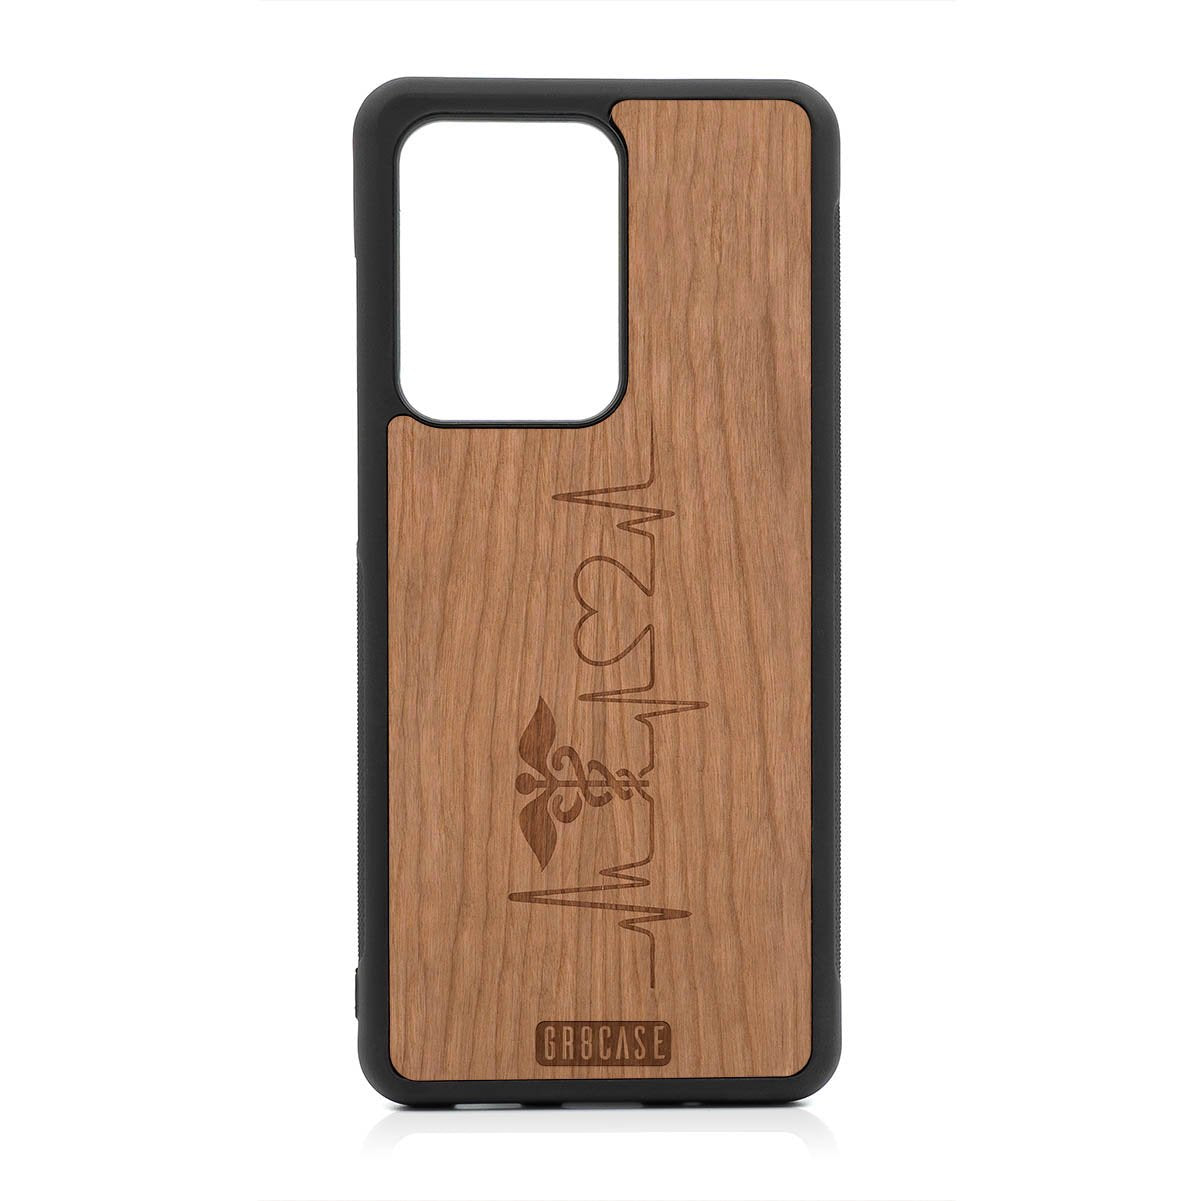 Hero's Heart (Nurse, Doctor) Design Wood Case For Samsung Galaxy S20 Ultra by GR8CASE